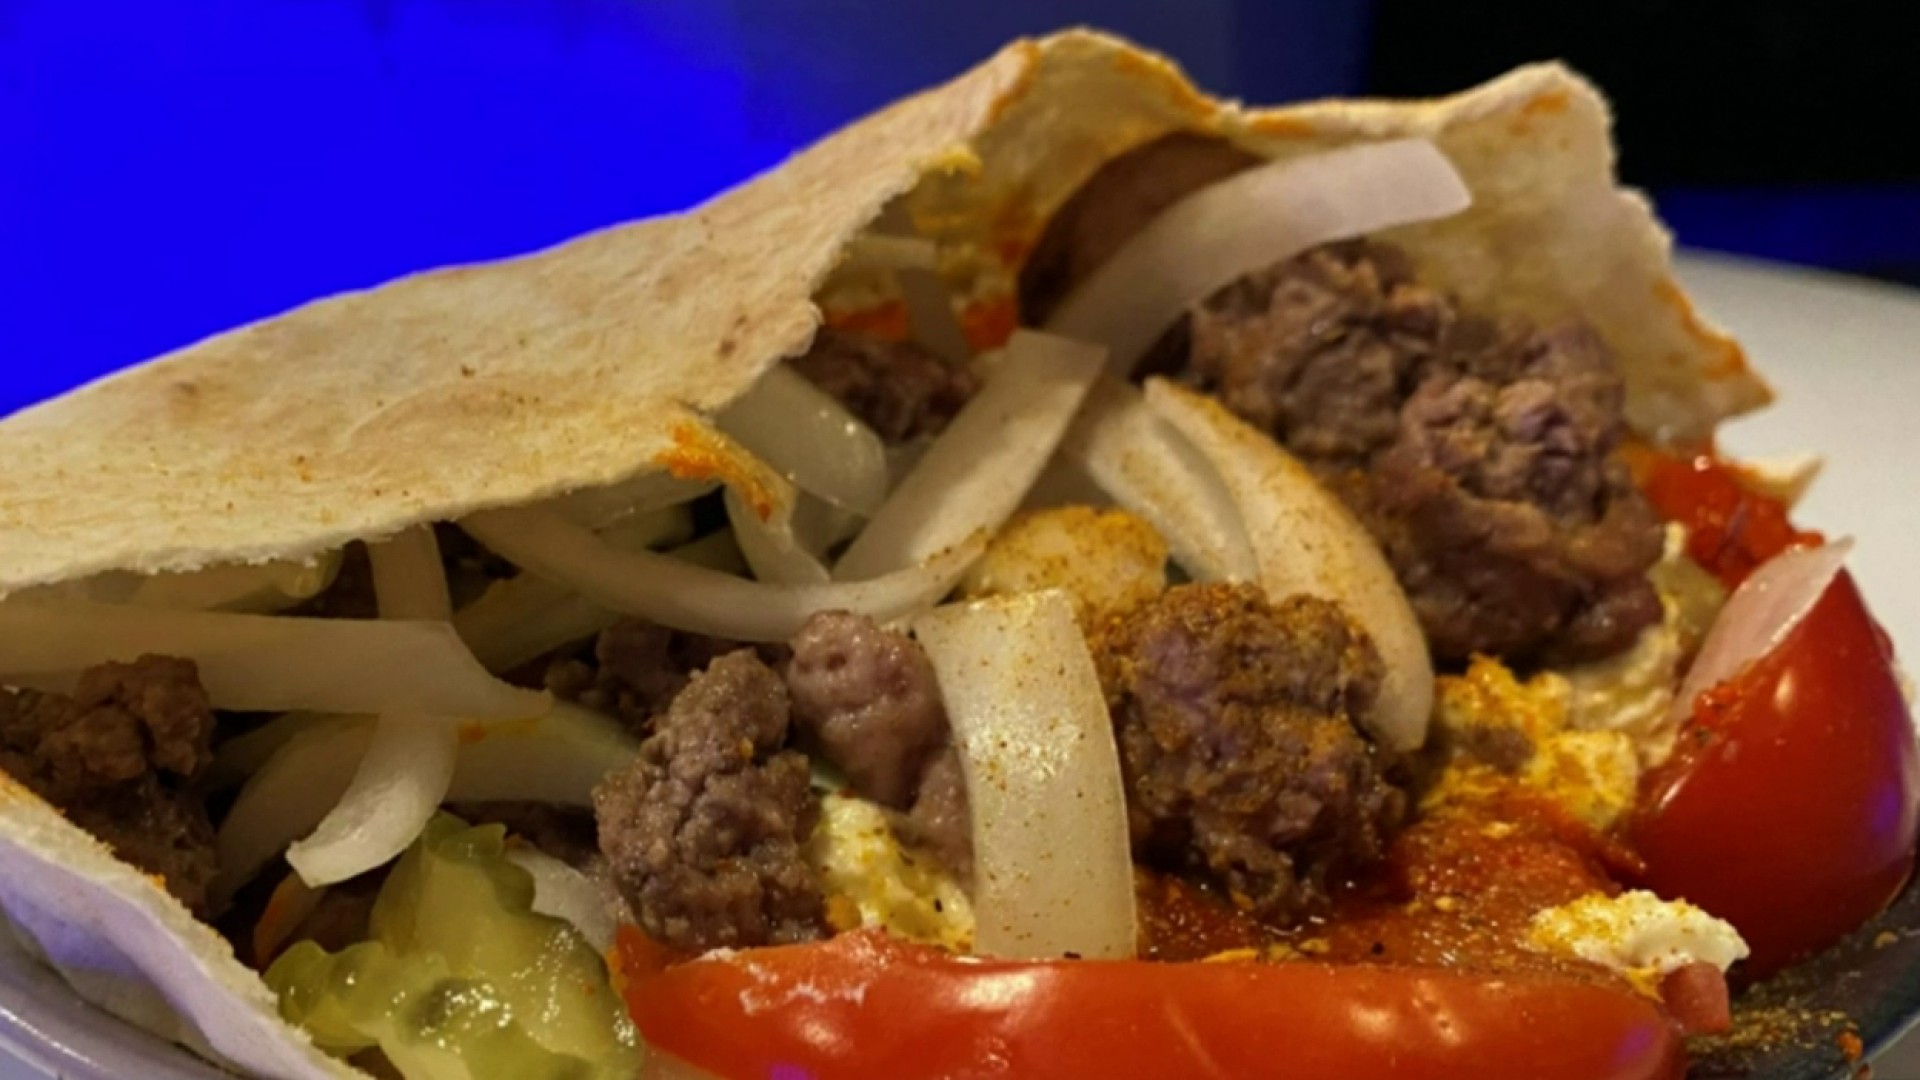 International Recipe Week: Jason makes Serbian burgers on Live in the D